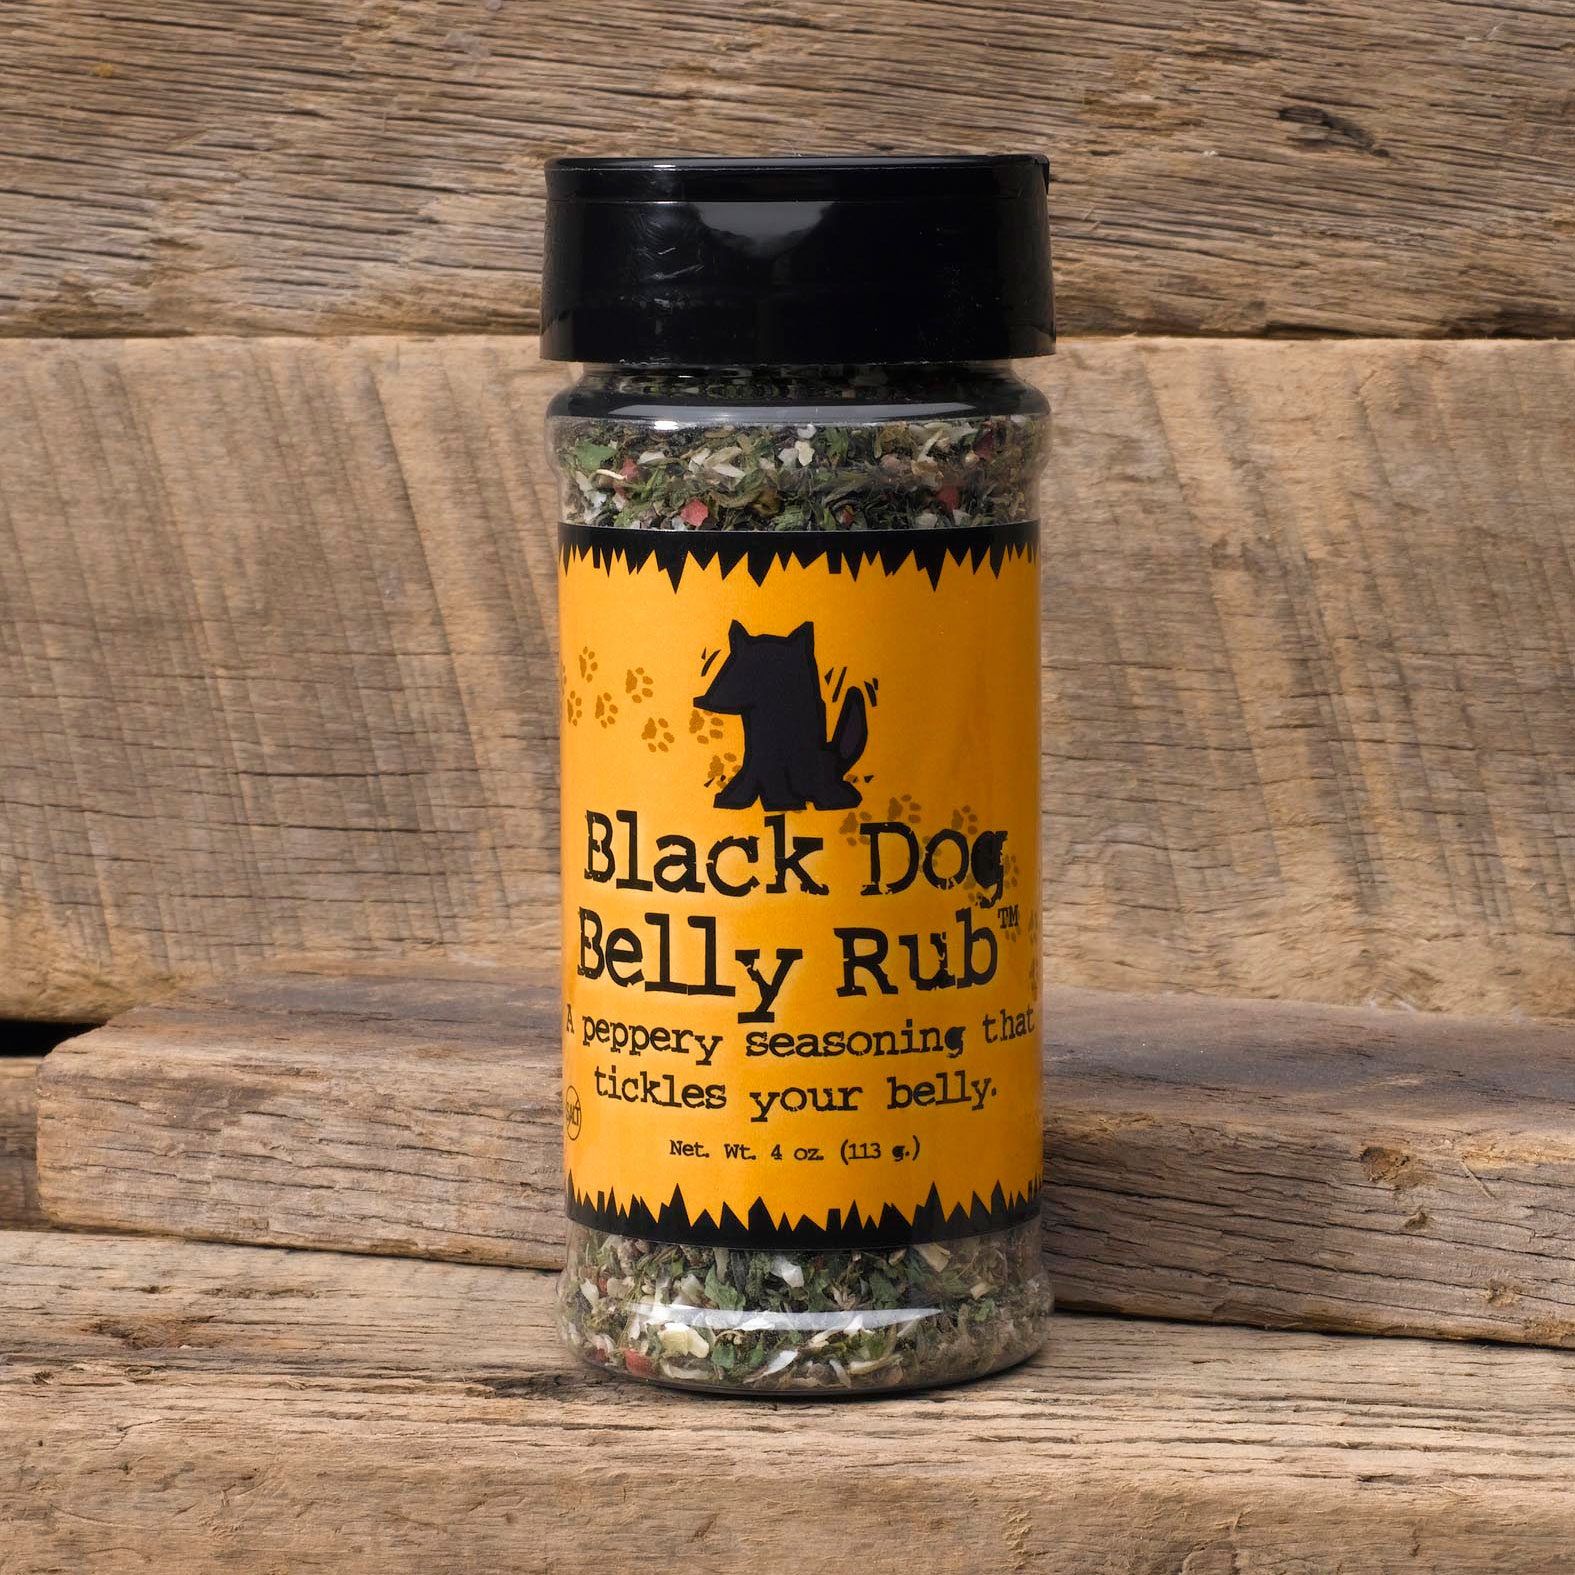 Black Dog Belly Rub bottle